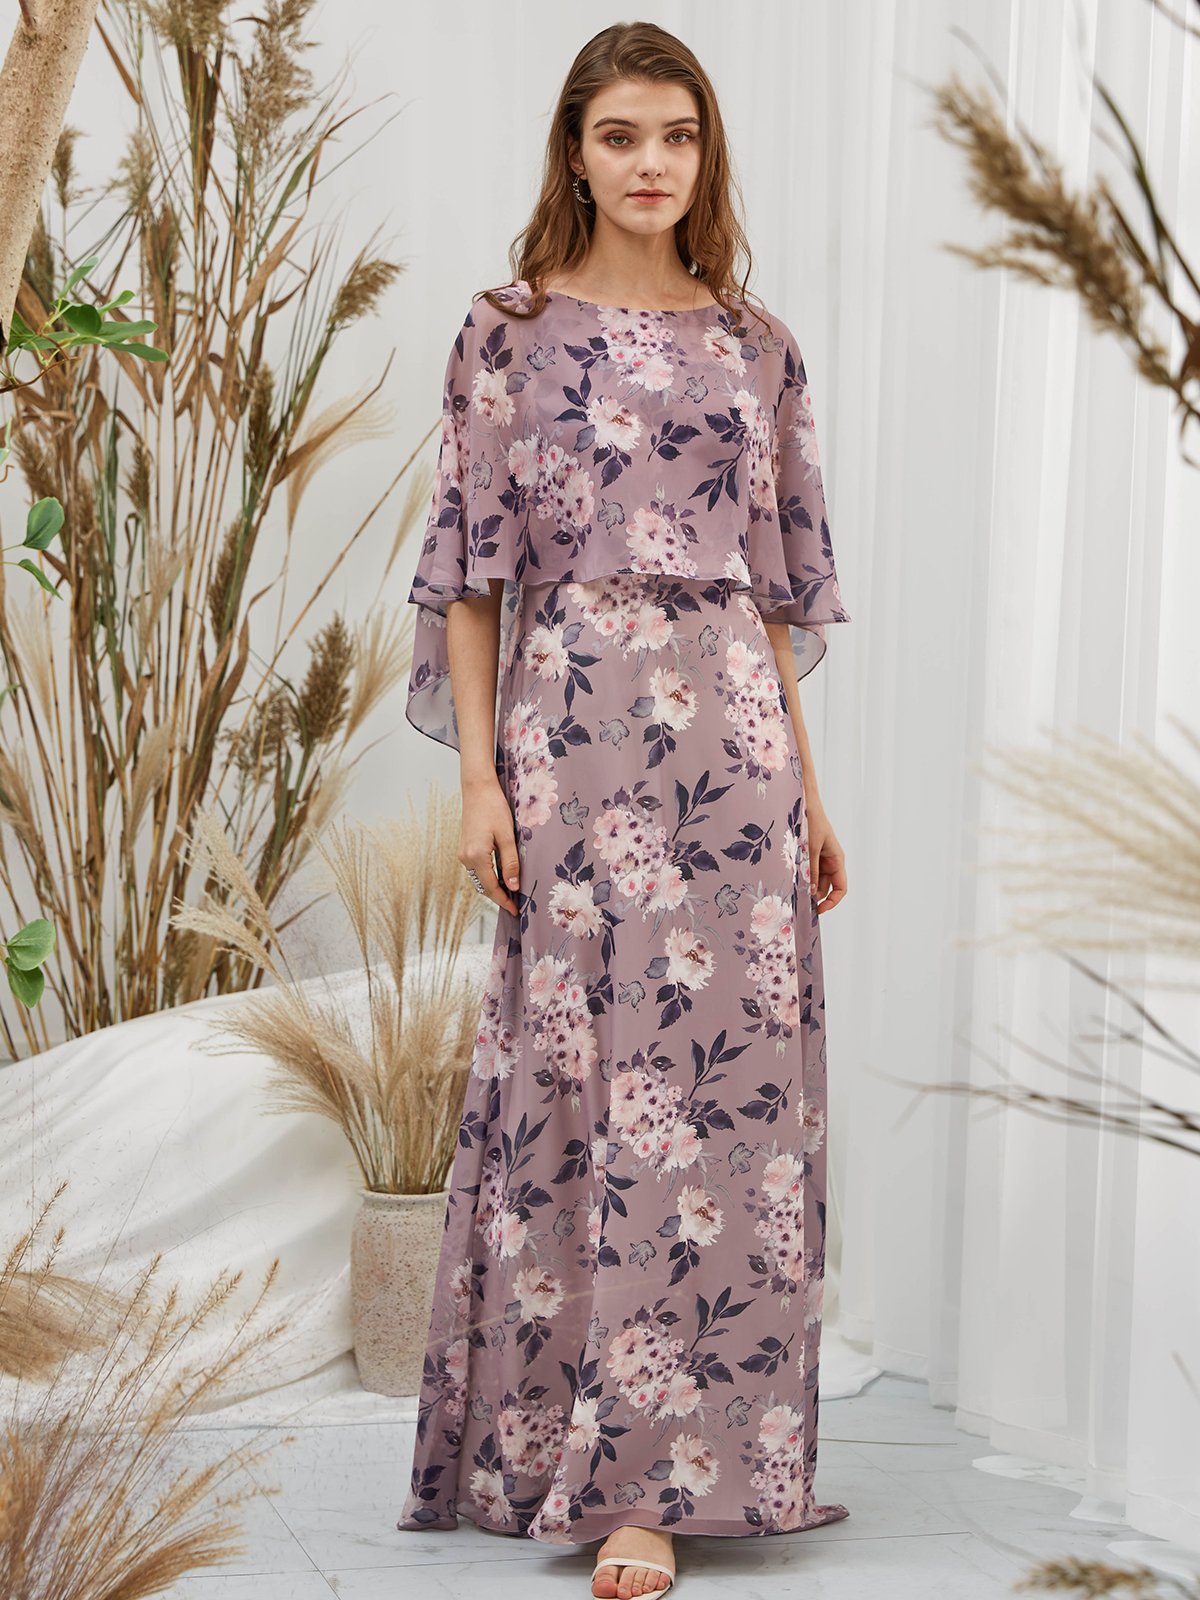 MissJophiel Cape Sleeves Boat Neck Chiffon Print Floral Wisteria Floor Length Formal Evening Gown